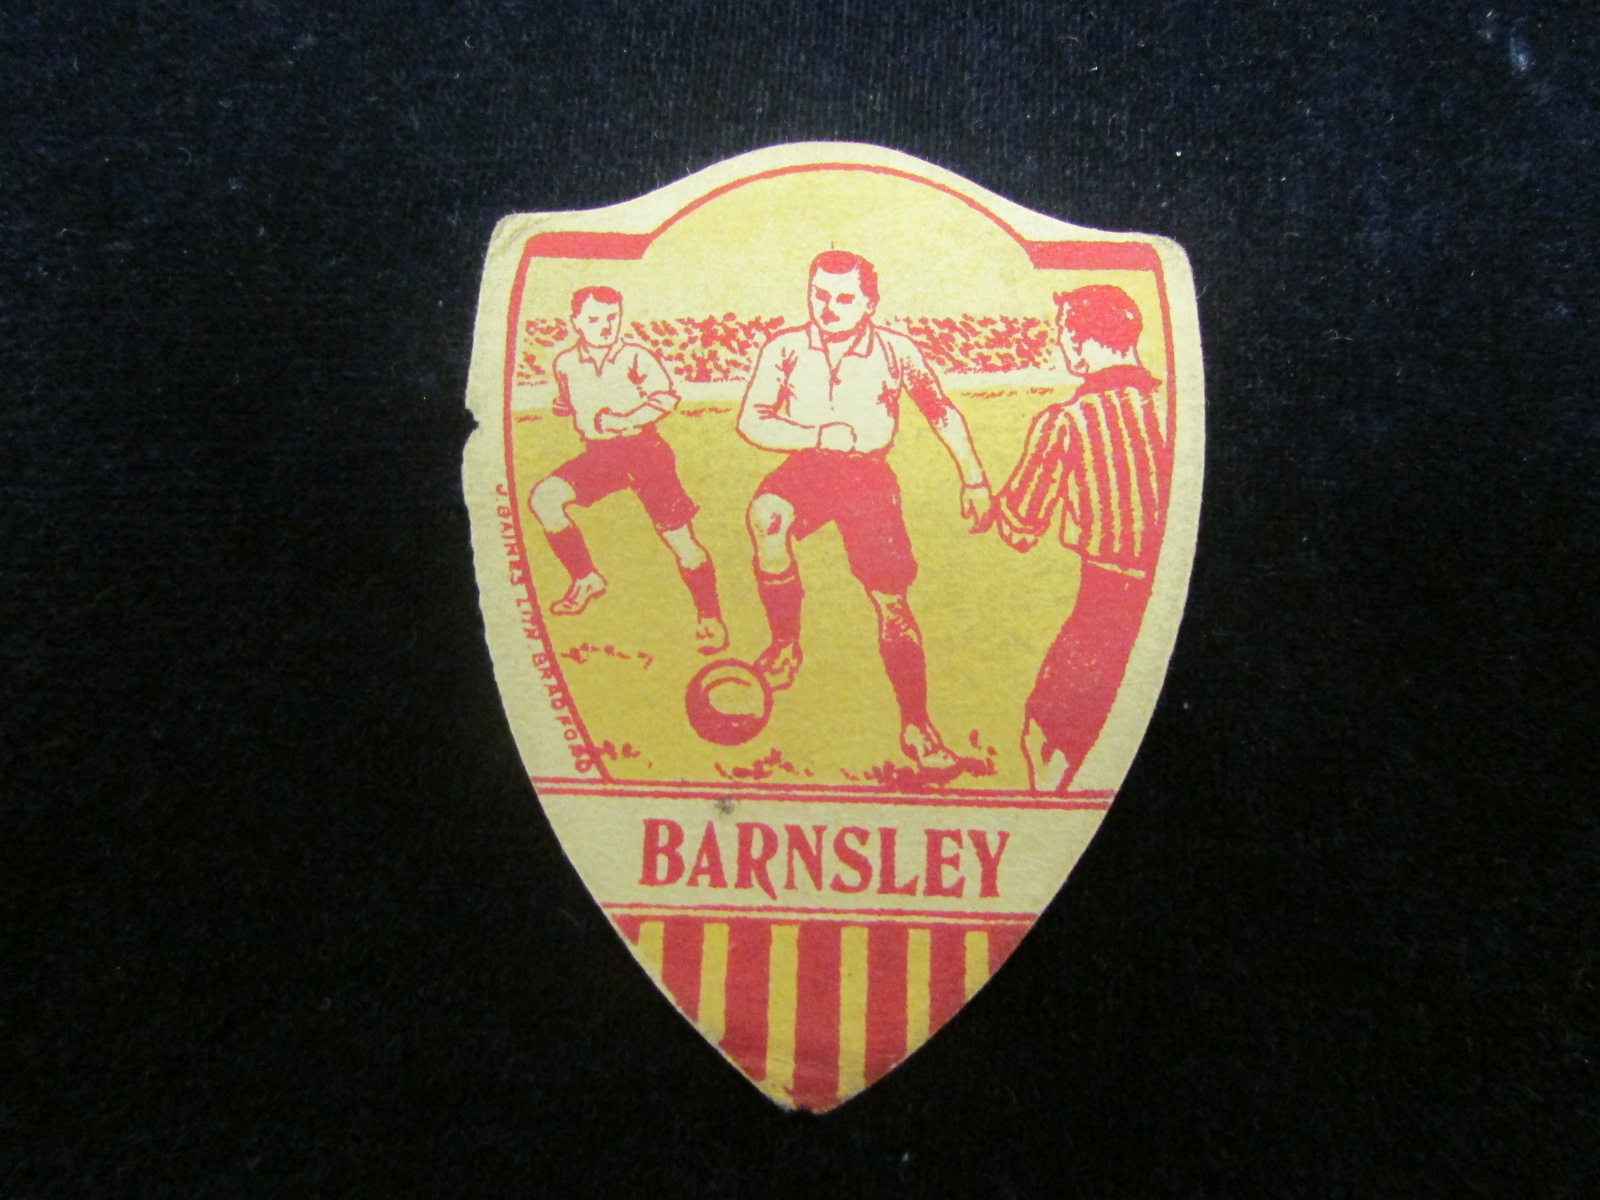 Football - Barnsley, shield